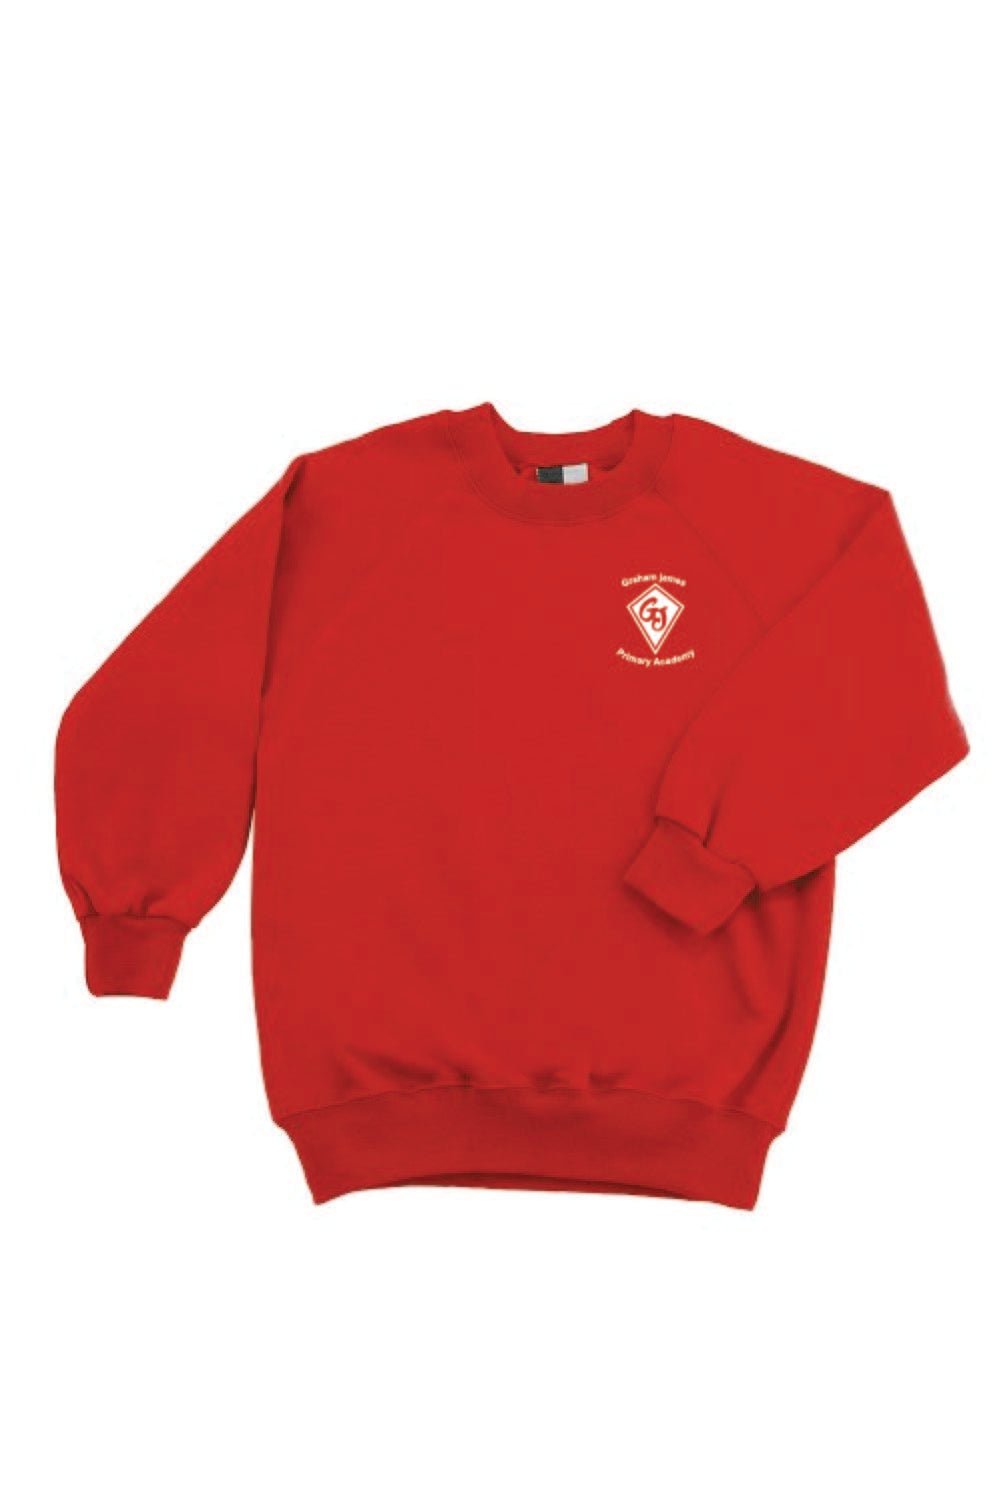 Graham James Sweatshirt Jumper - Uniformwise Schoolwear